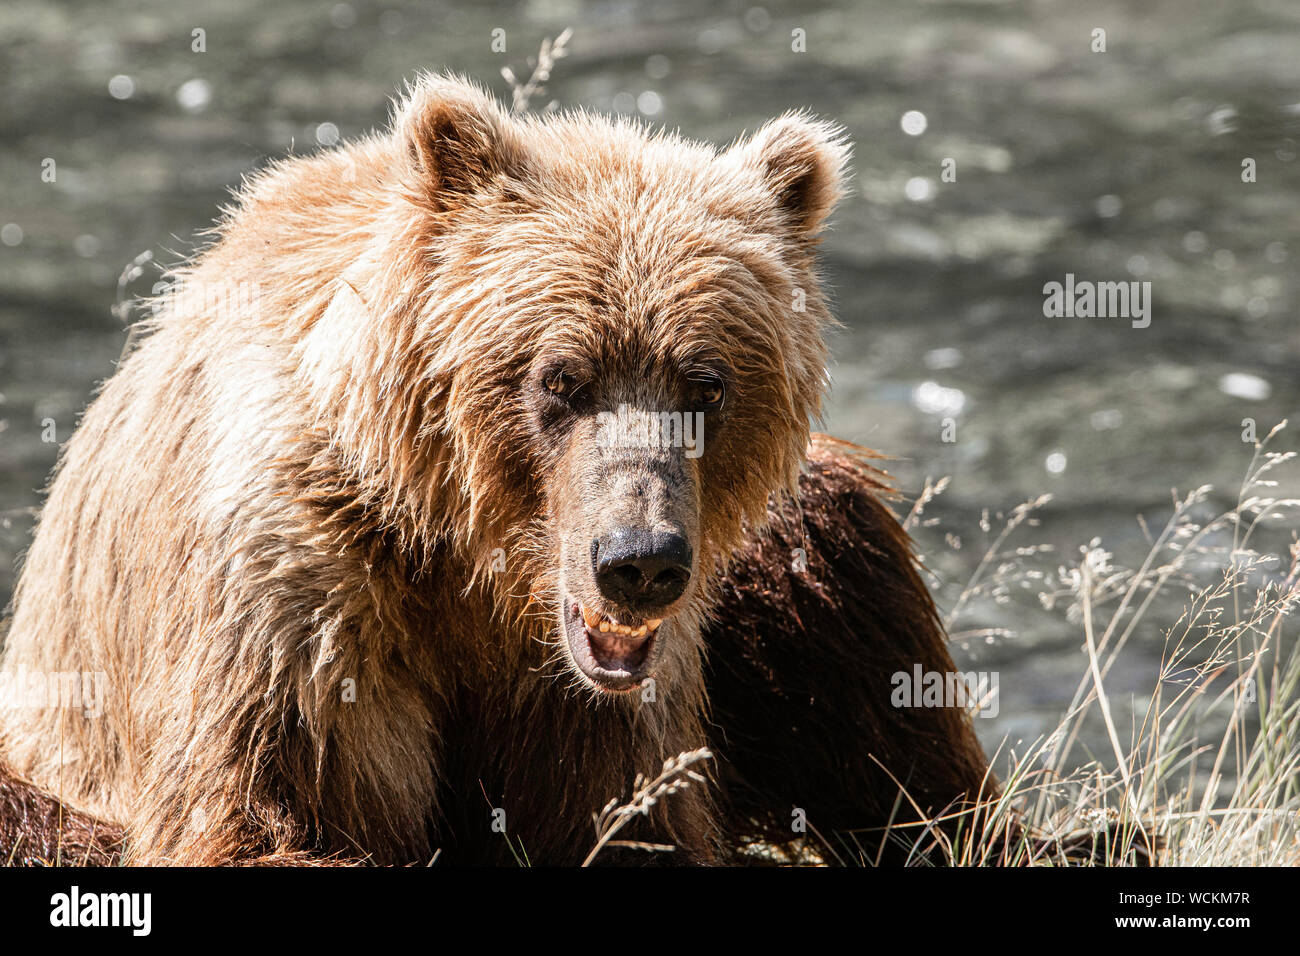 Grizzlybären, Ursus arctos horribilis, Braunbär, Nordamerika, Kanada, Stockfoto